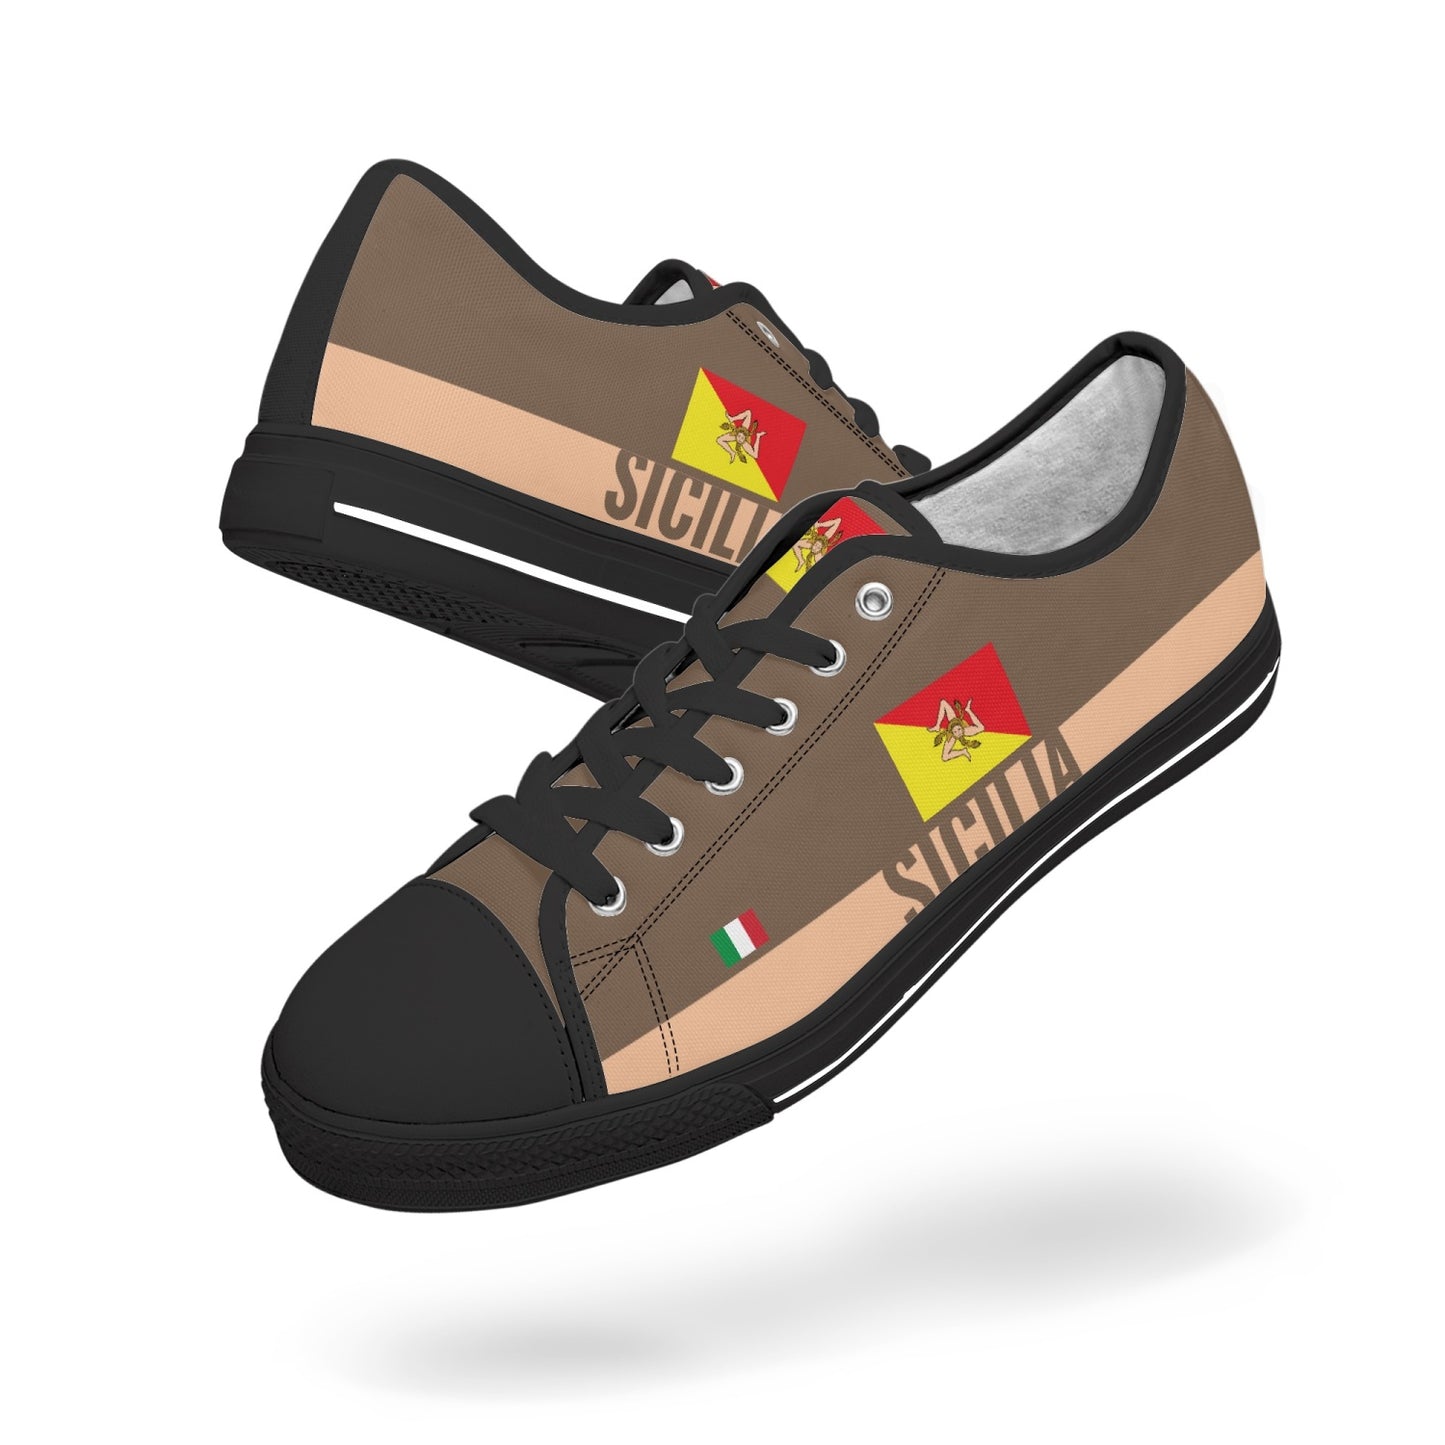 Sicily Shoes Low-top V2